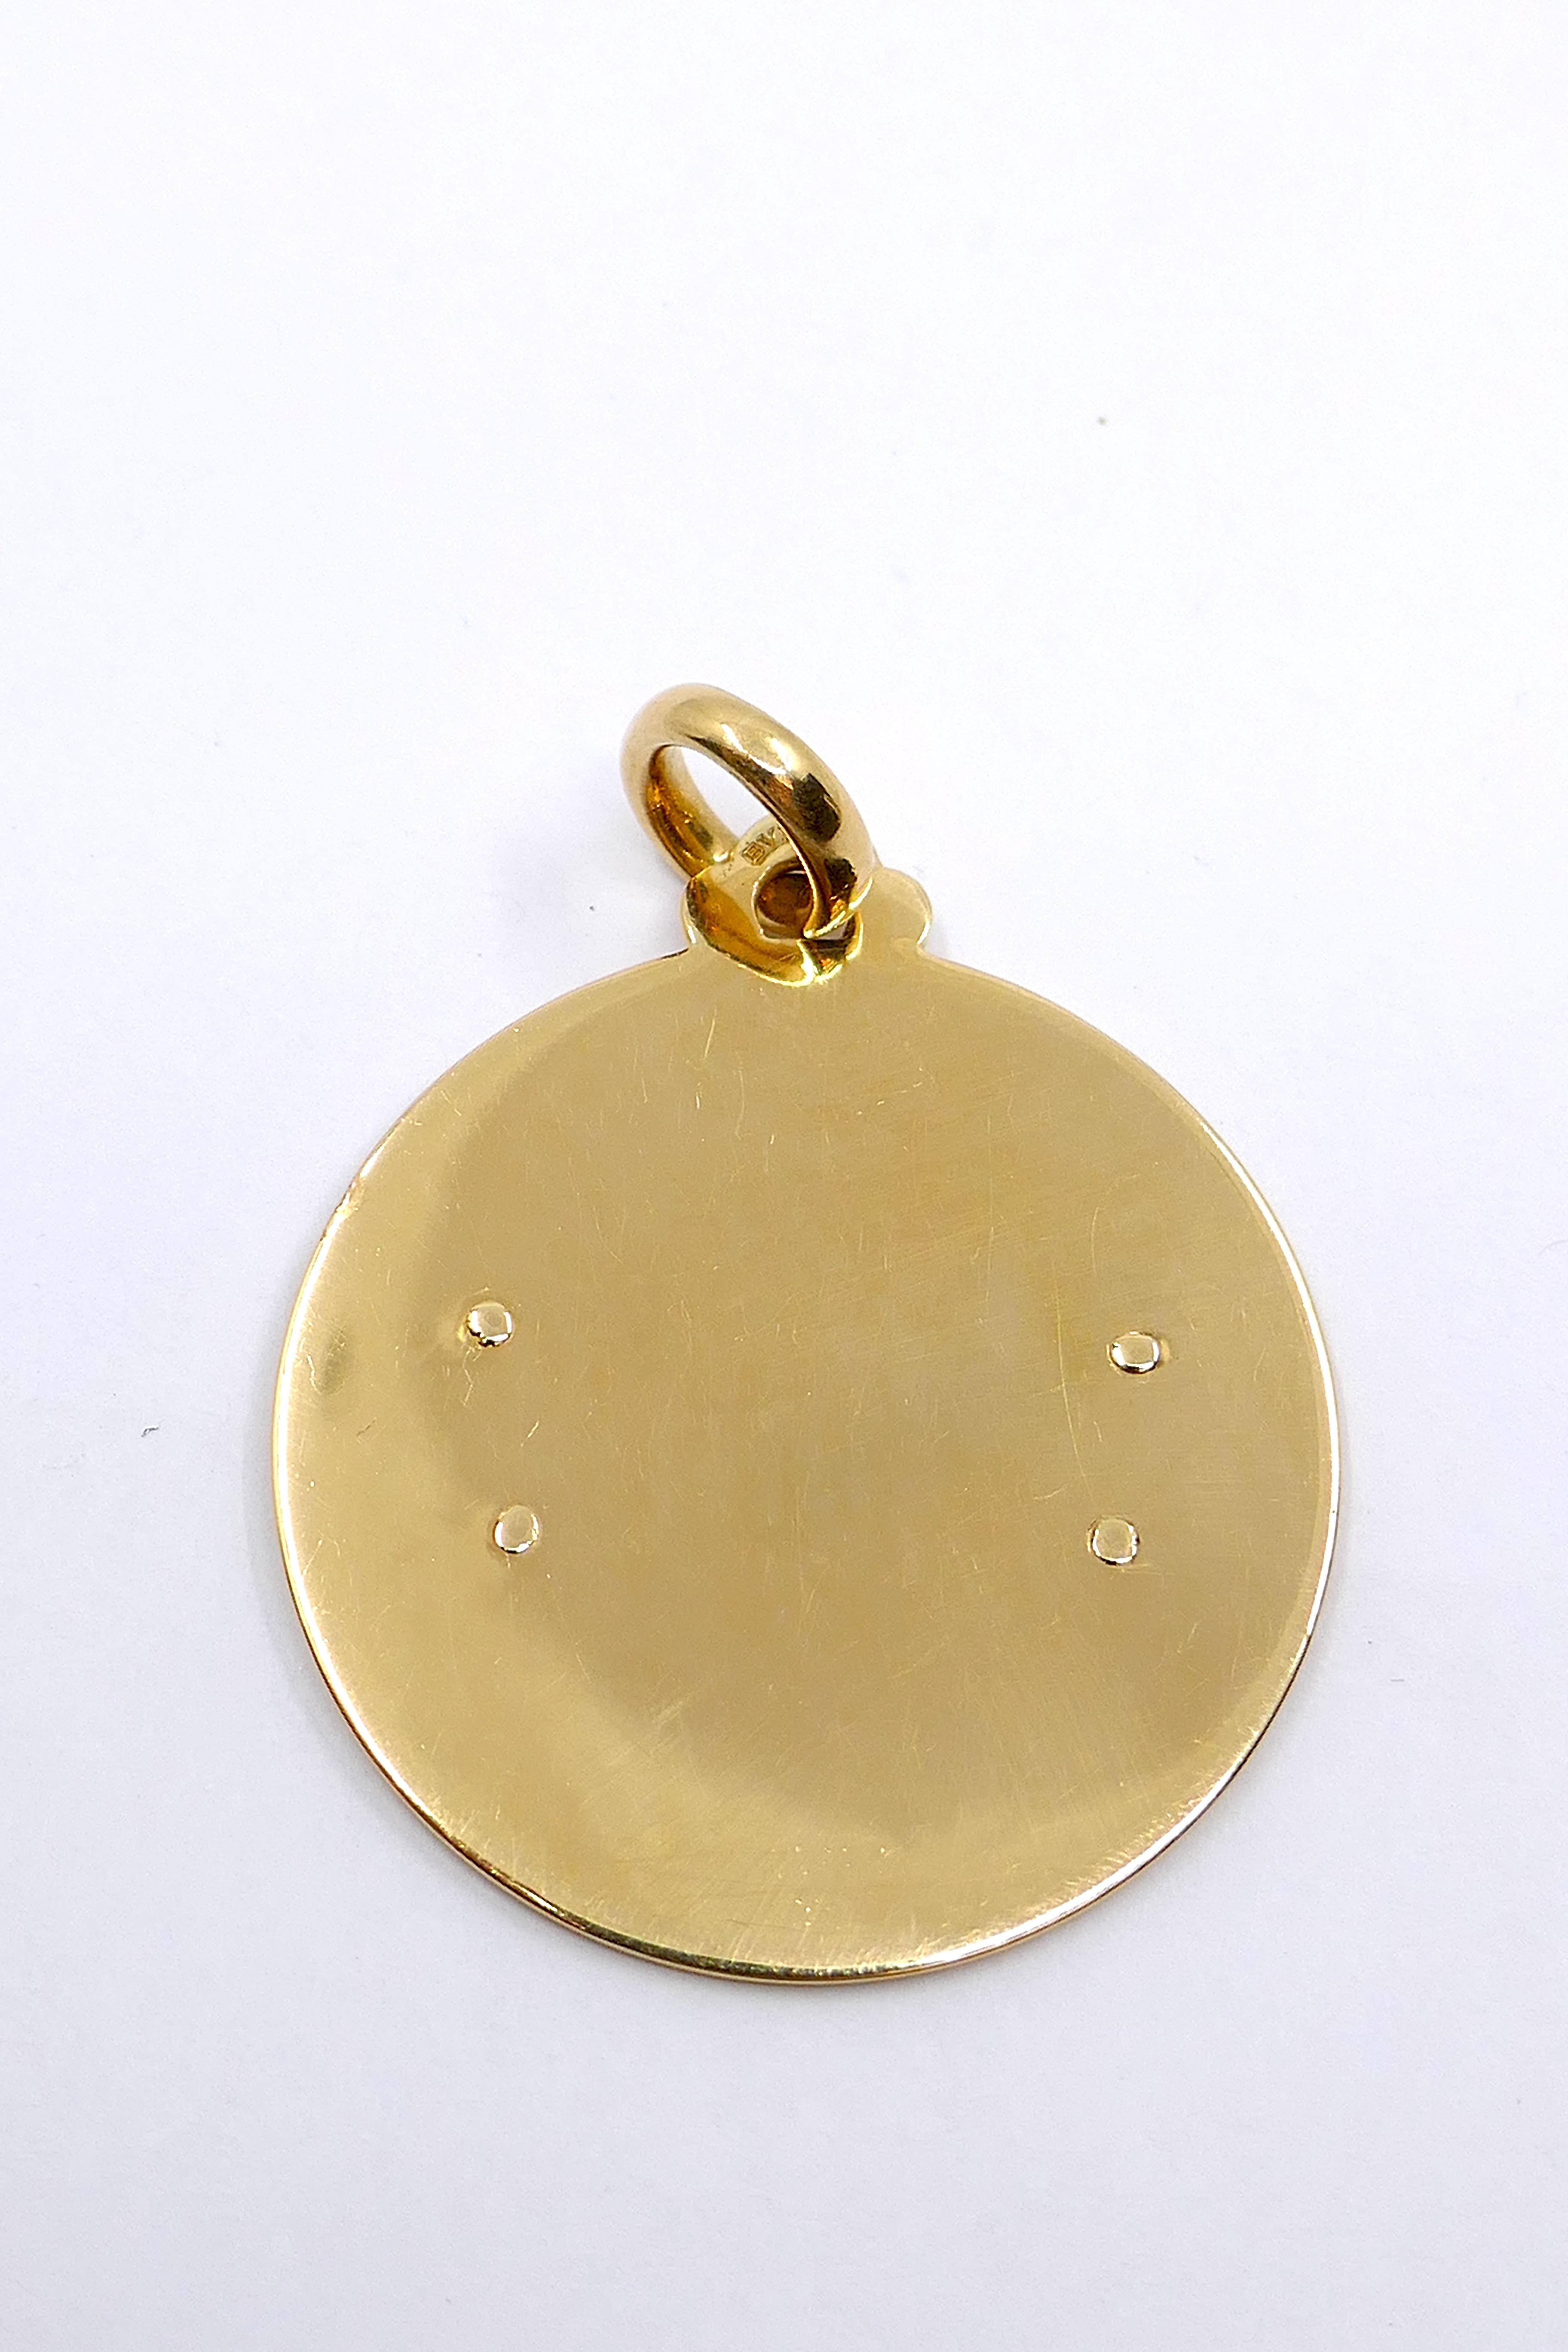 Vintage Bvlgari Zodiac Pendant & Chain Necklace 18k Gold & Steel For Sale 4